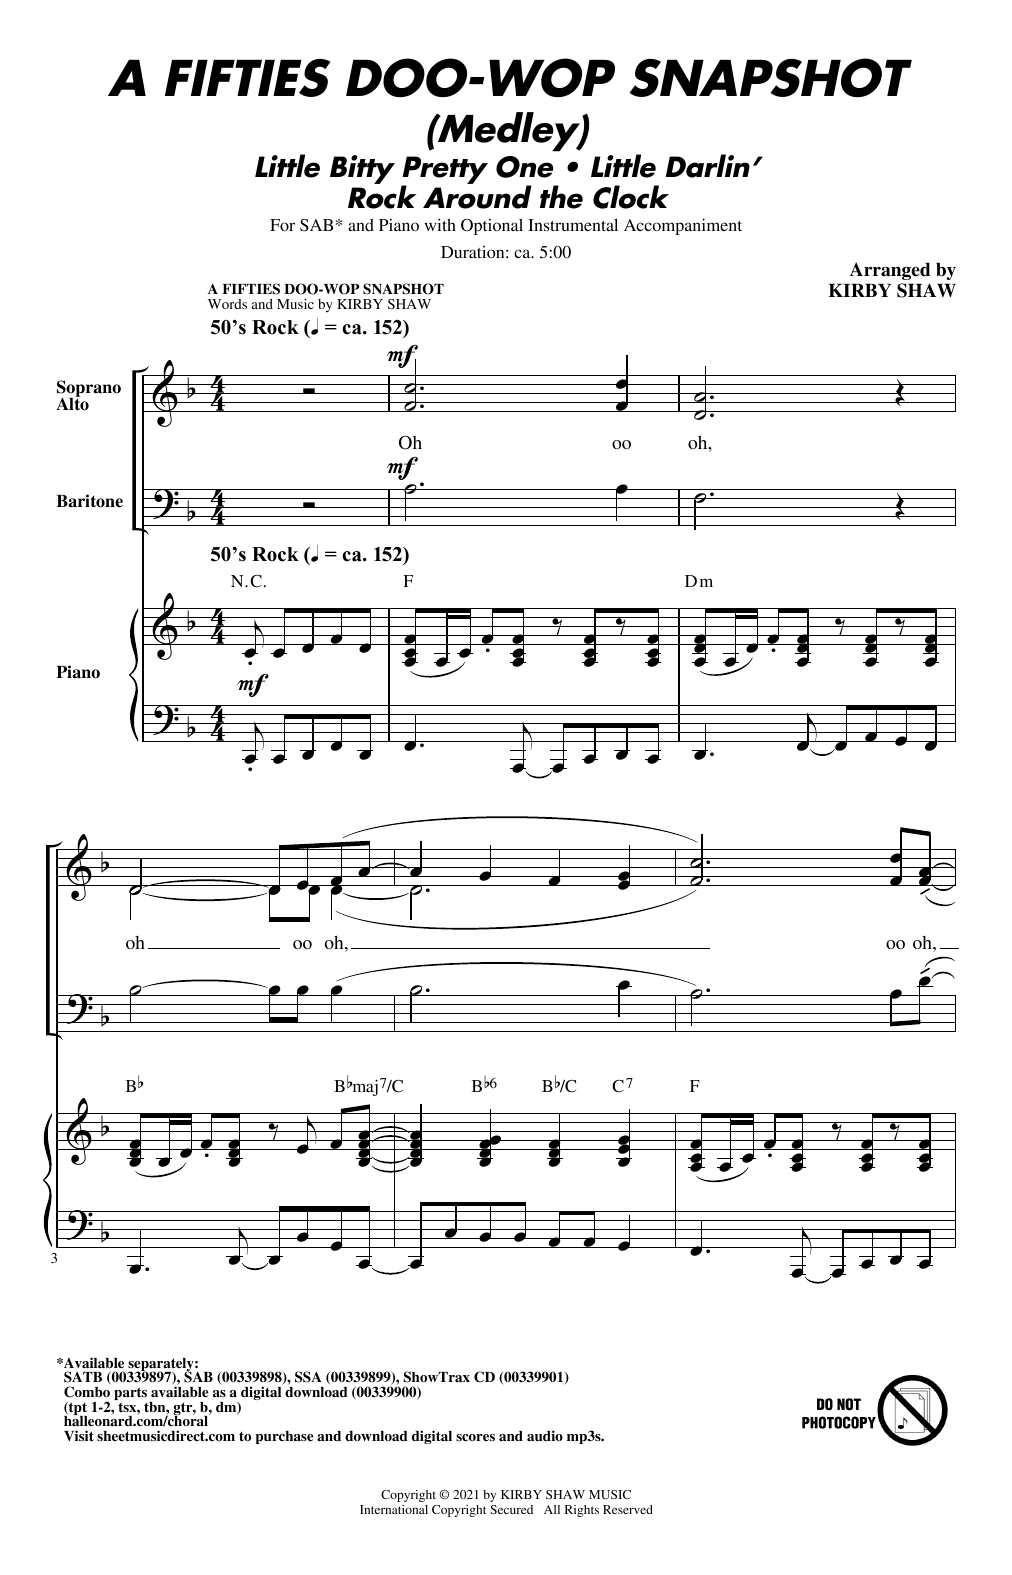 Kirby Shaw A Fifties Doo-Wop Snapshot (Medley) Sheet Music Notes & Chords for SAB Choir - Download or Print PDF